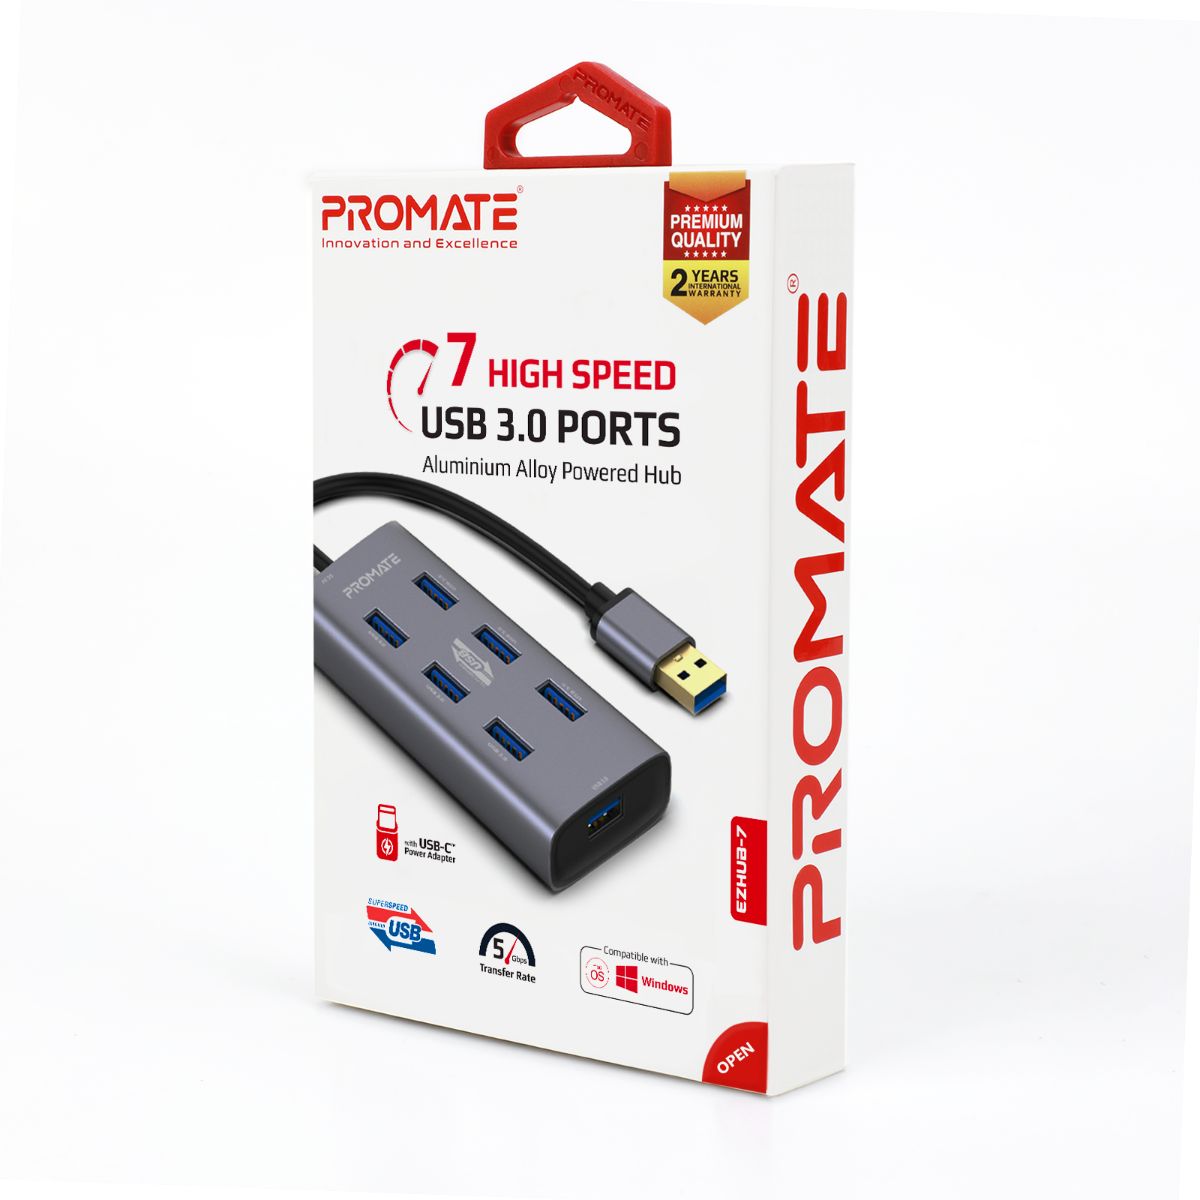 Promate - 7 Port USB 3.0 Hub, Portable Aluminium Alloy Port USB 3.0 Powered Hub with 5Gbps Data Transfer and USB-C™ Power Adapter for MacBook, iMac, Laptop, USB Flash Drive, HDD Hard Drive, EZHub-7